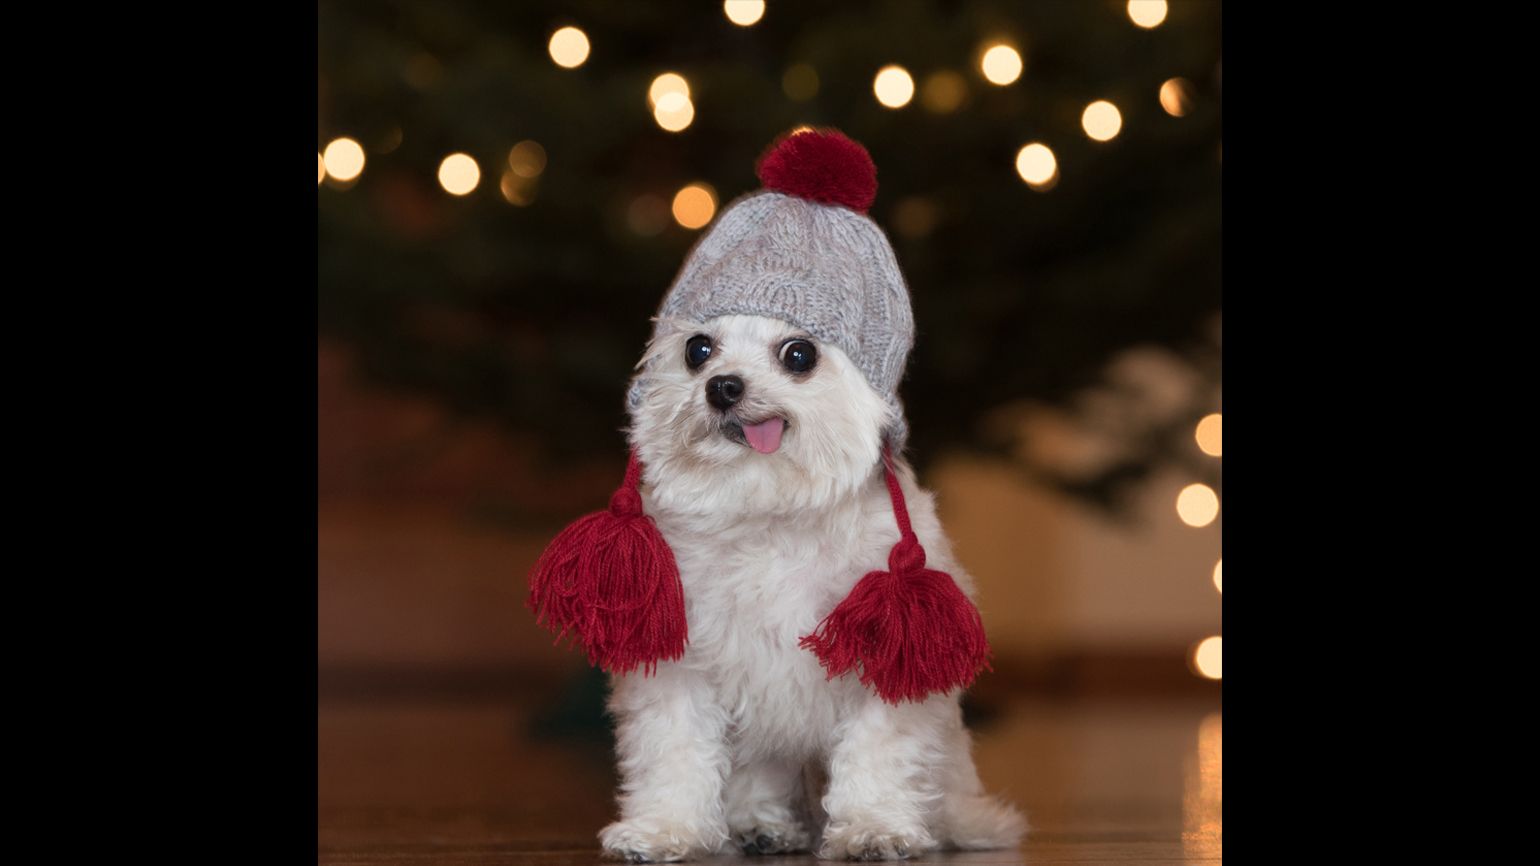 A holiday festive Norbert wearing a pom-pom hat.